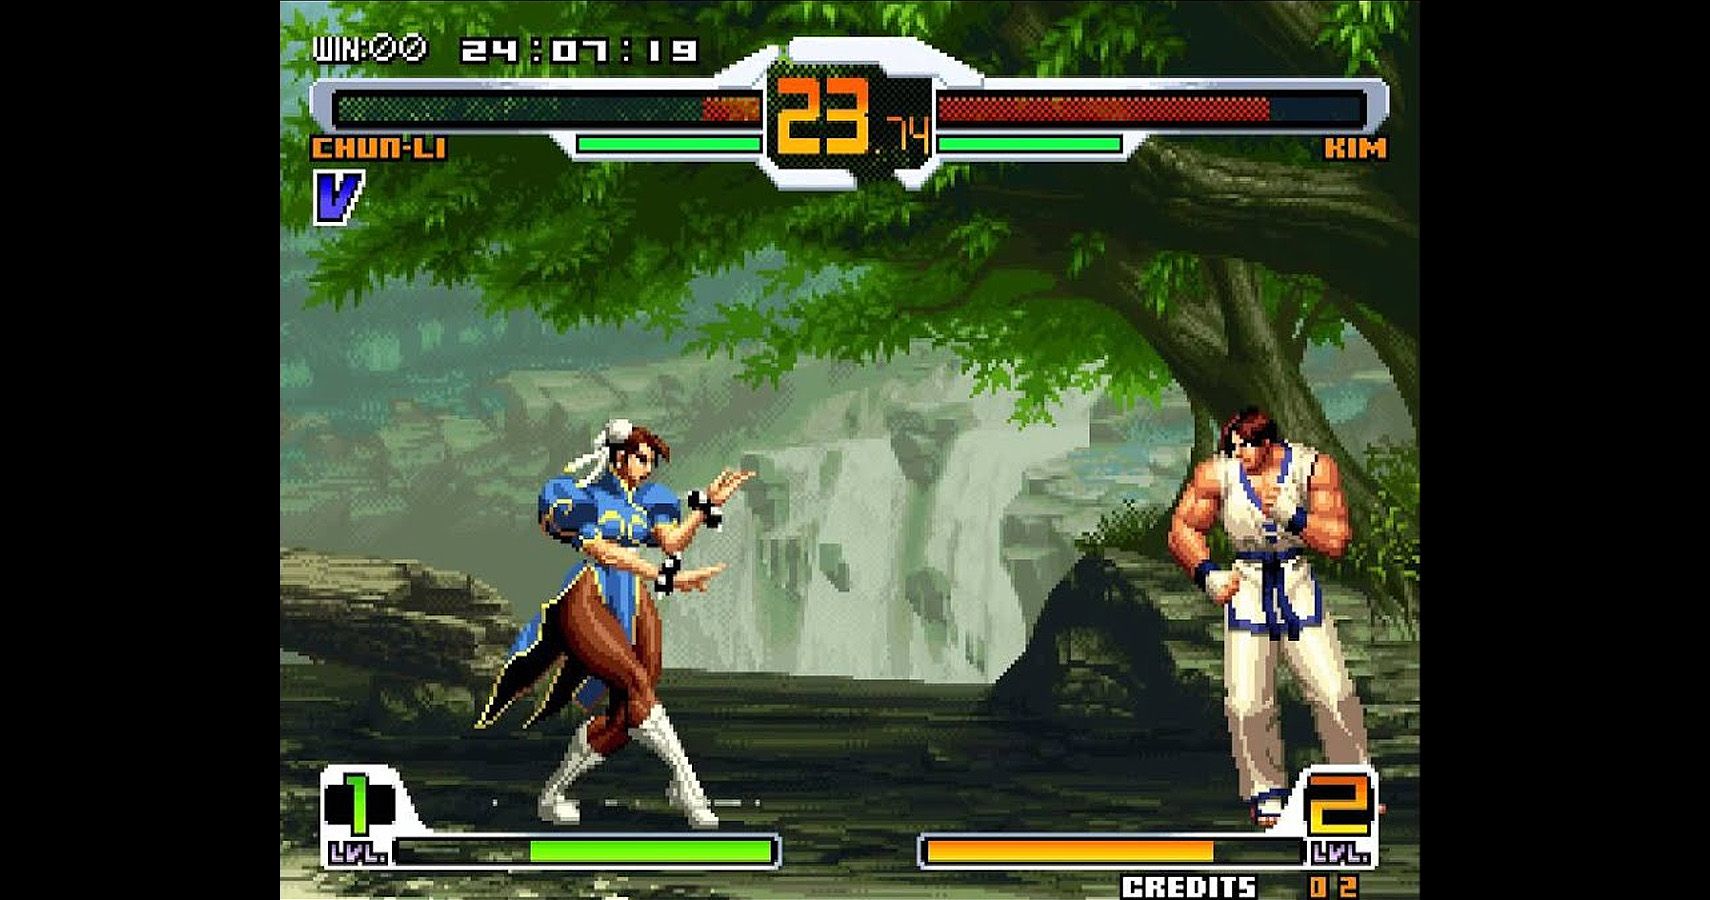 Chun-li approaches Kim near a waterfall in SNK vs Capcom: SVC Chaos.